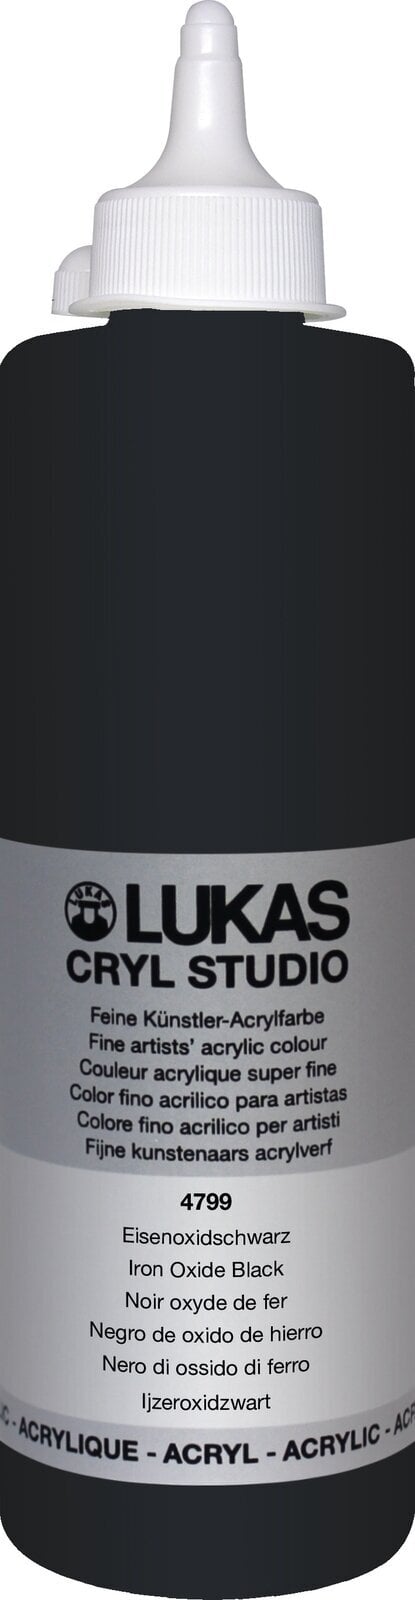 Acrylfarbe Lukas Cryl Studio Acrylic Paint Plastic Bottle Acrylfarbe Iron Oxid Black 500 ml 1 Stck